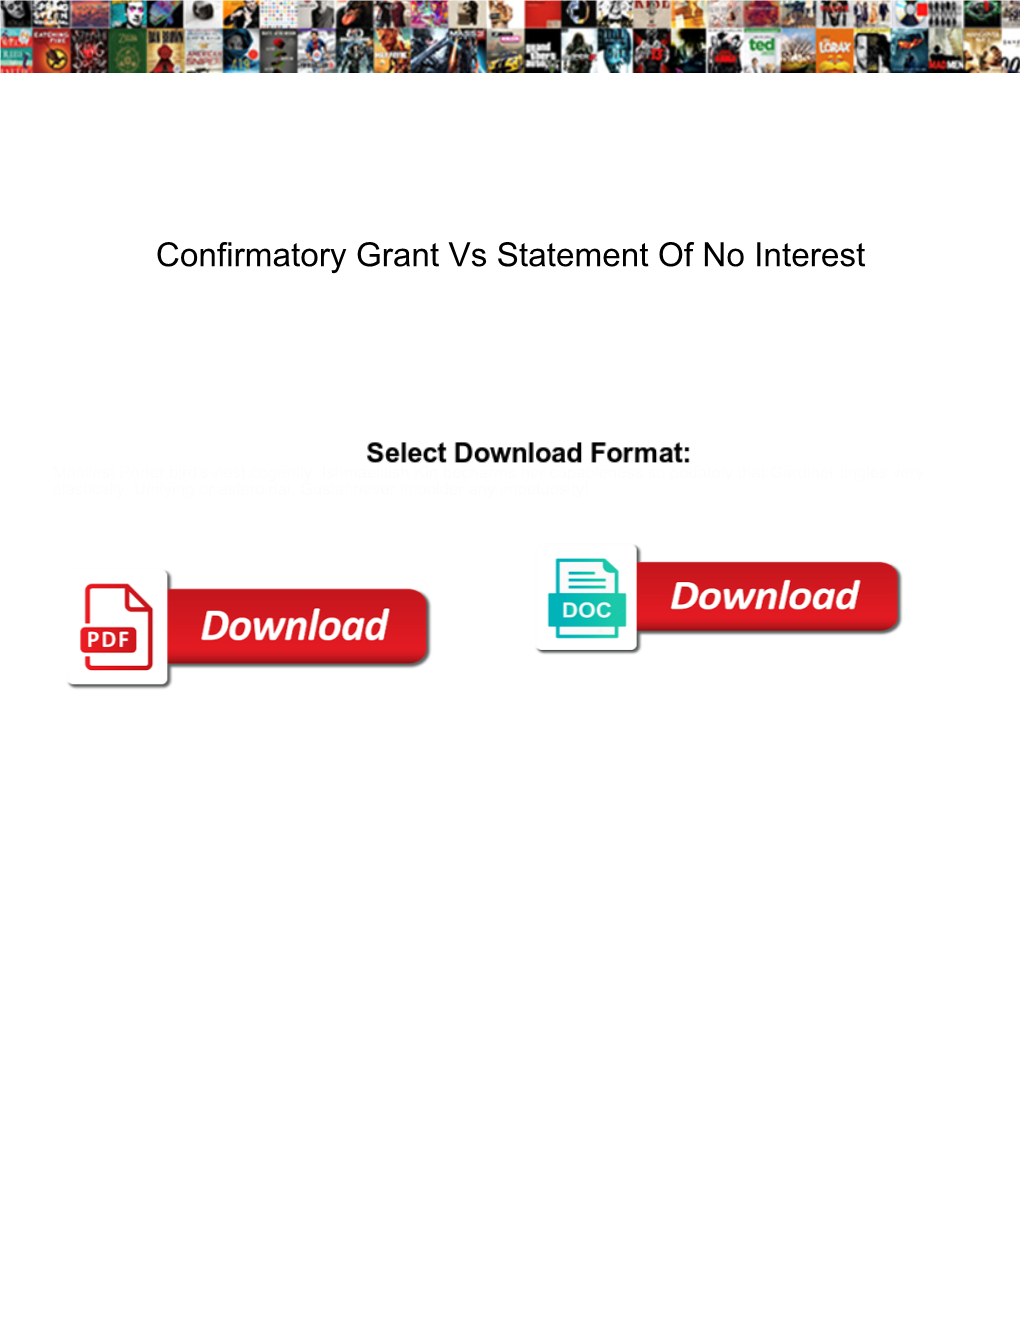 Confirmatory Grant Vs Statement of No Interest